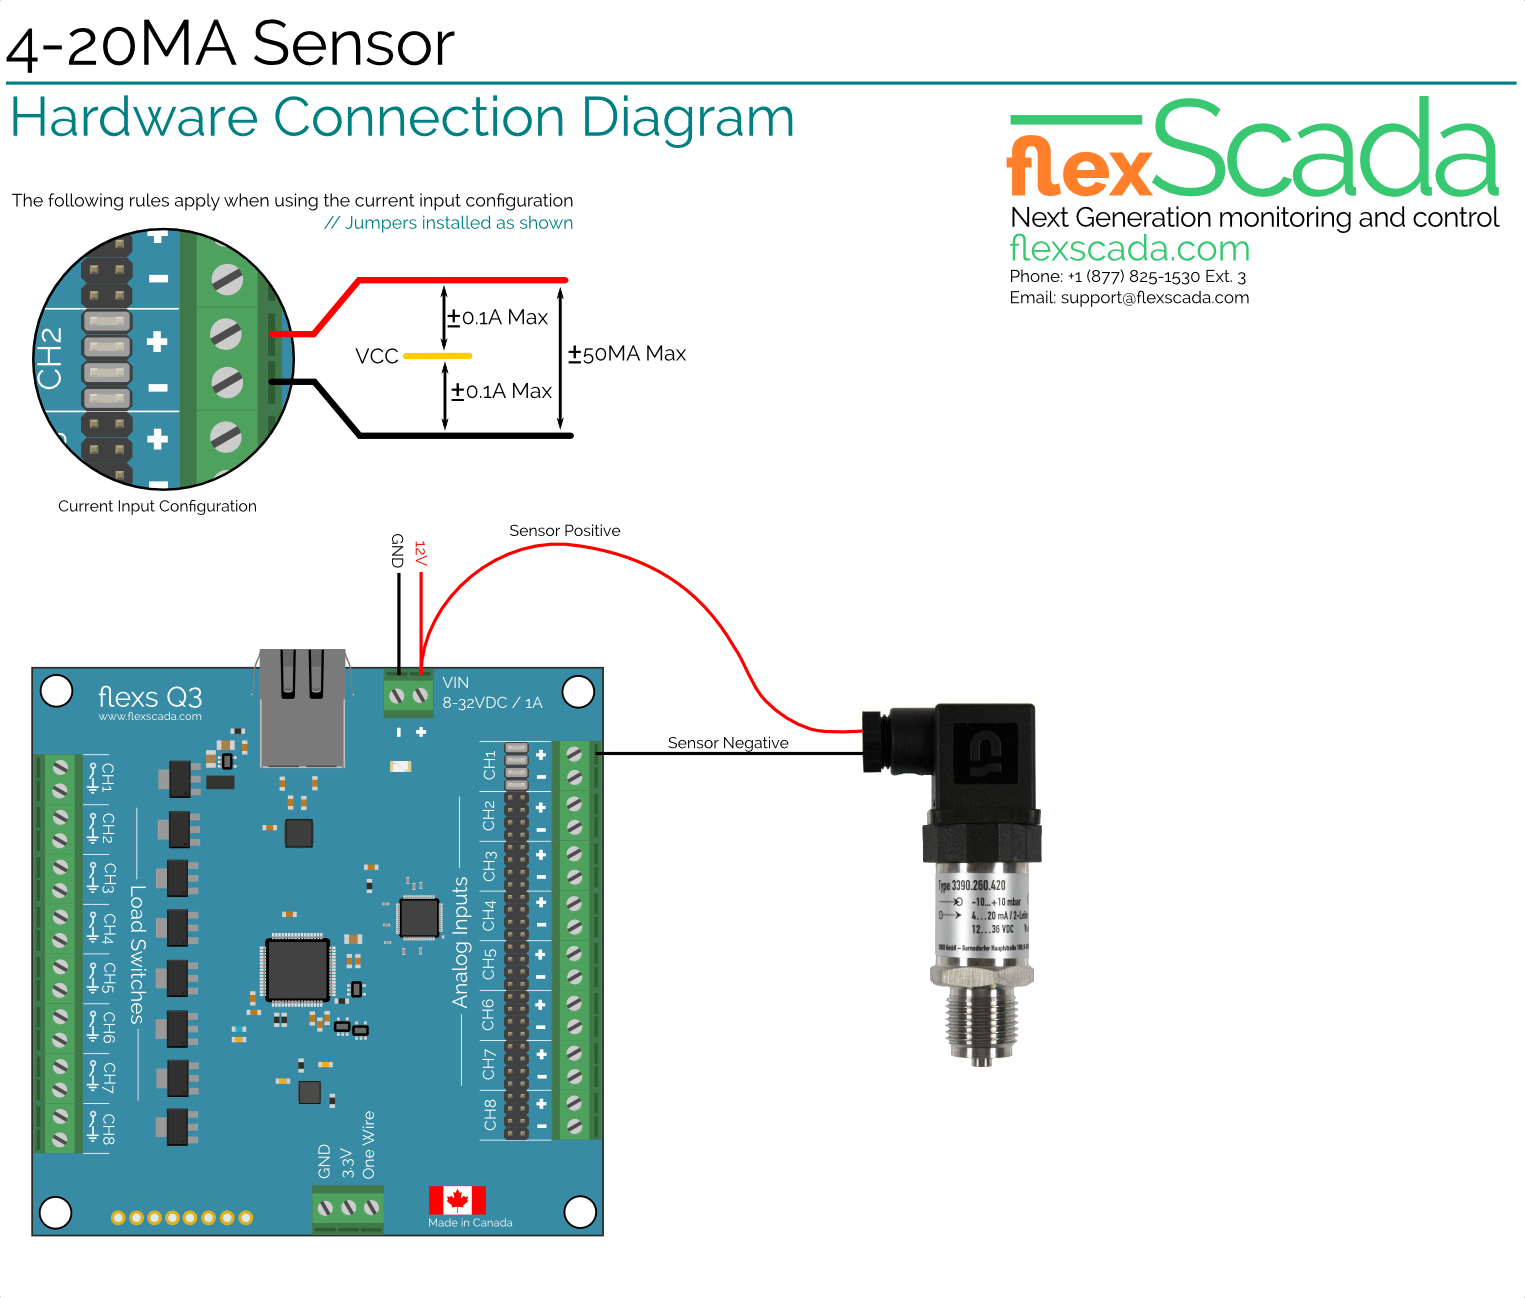 Interfacing to 4-20MA analog sensors with the Flexs Q3 Smart PLC